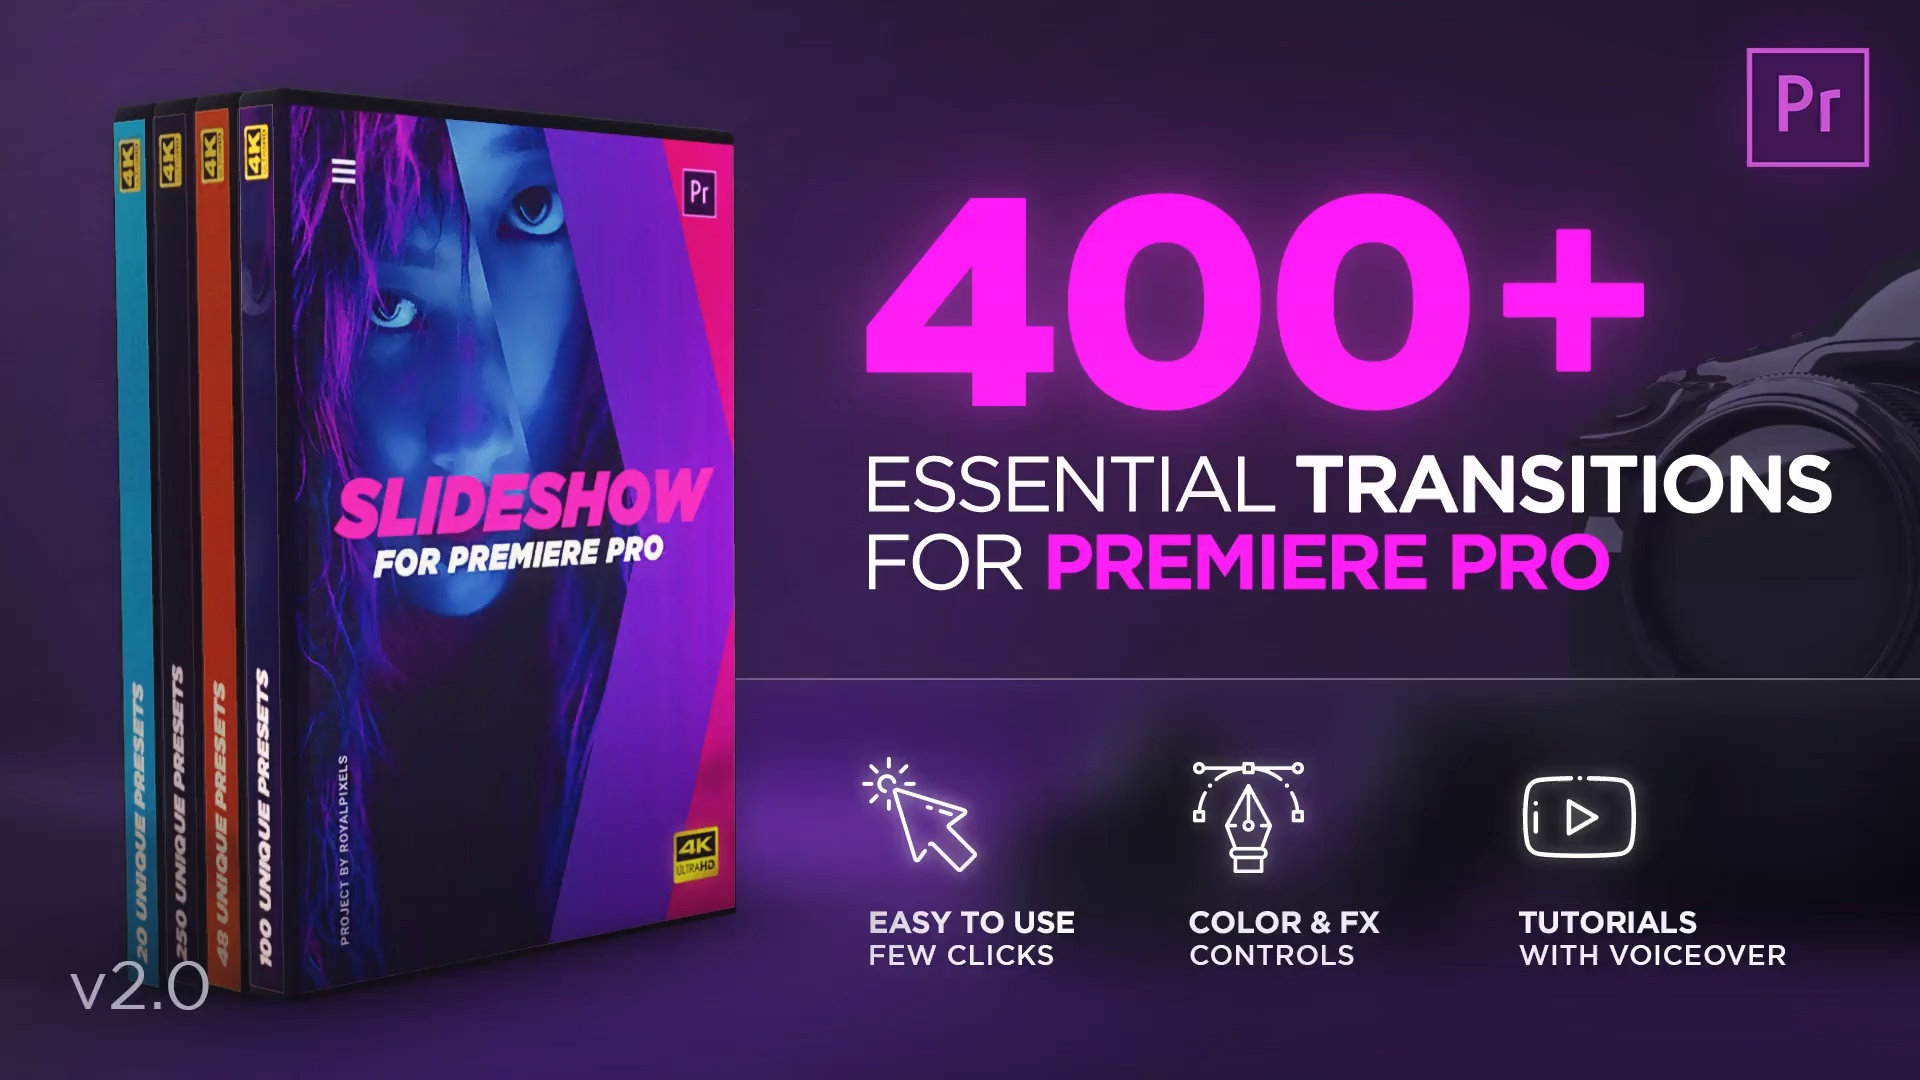 essential graphics premiere pro 2020